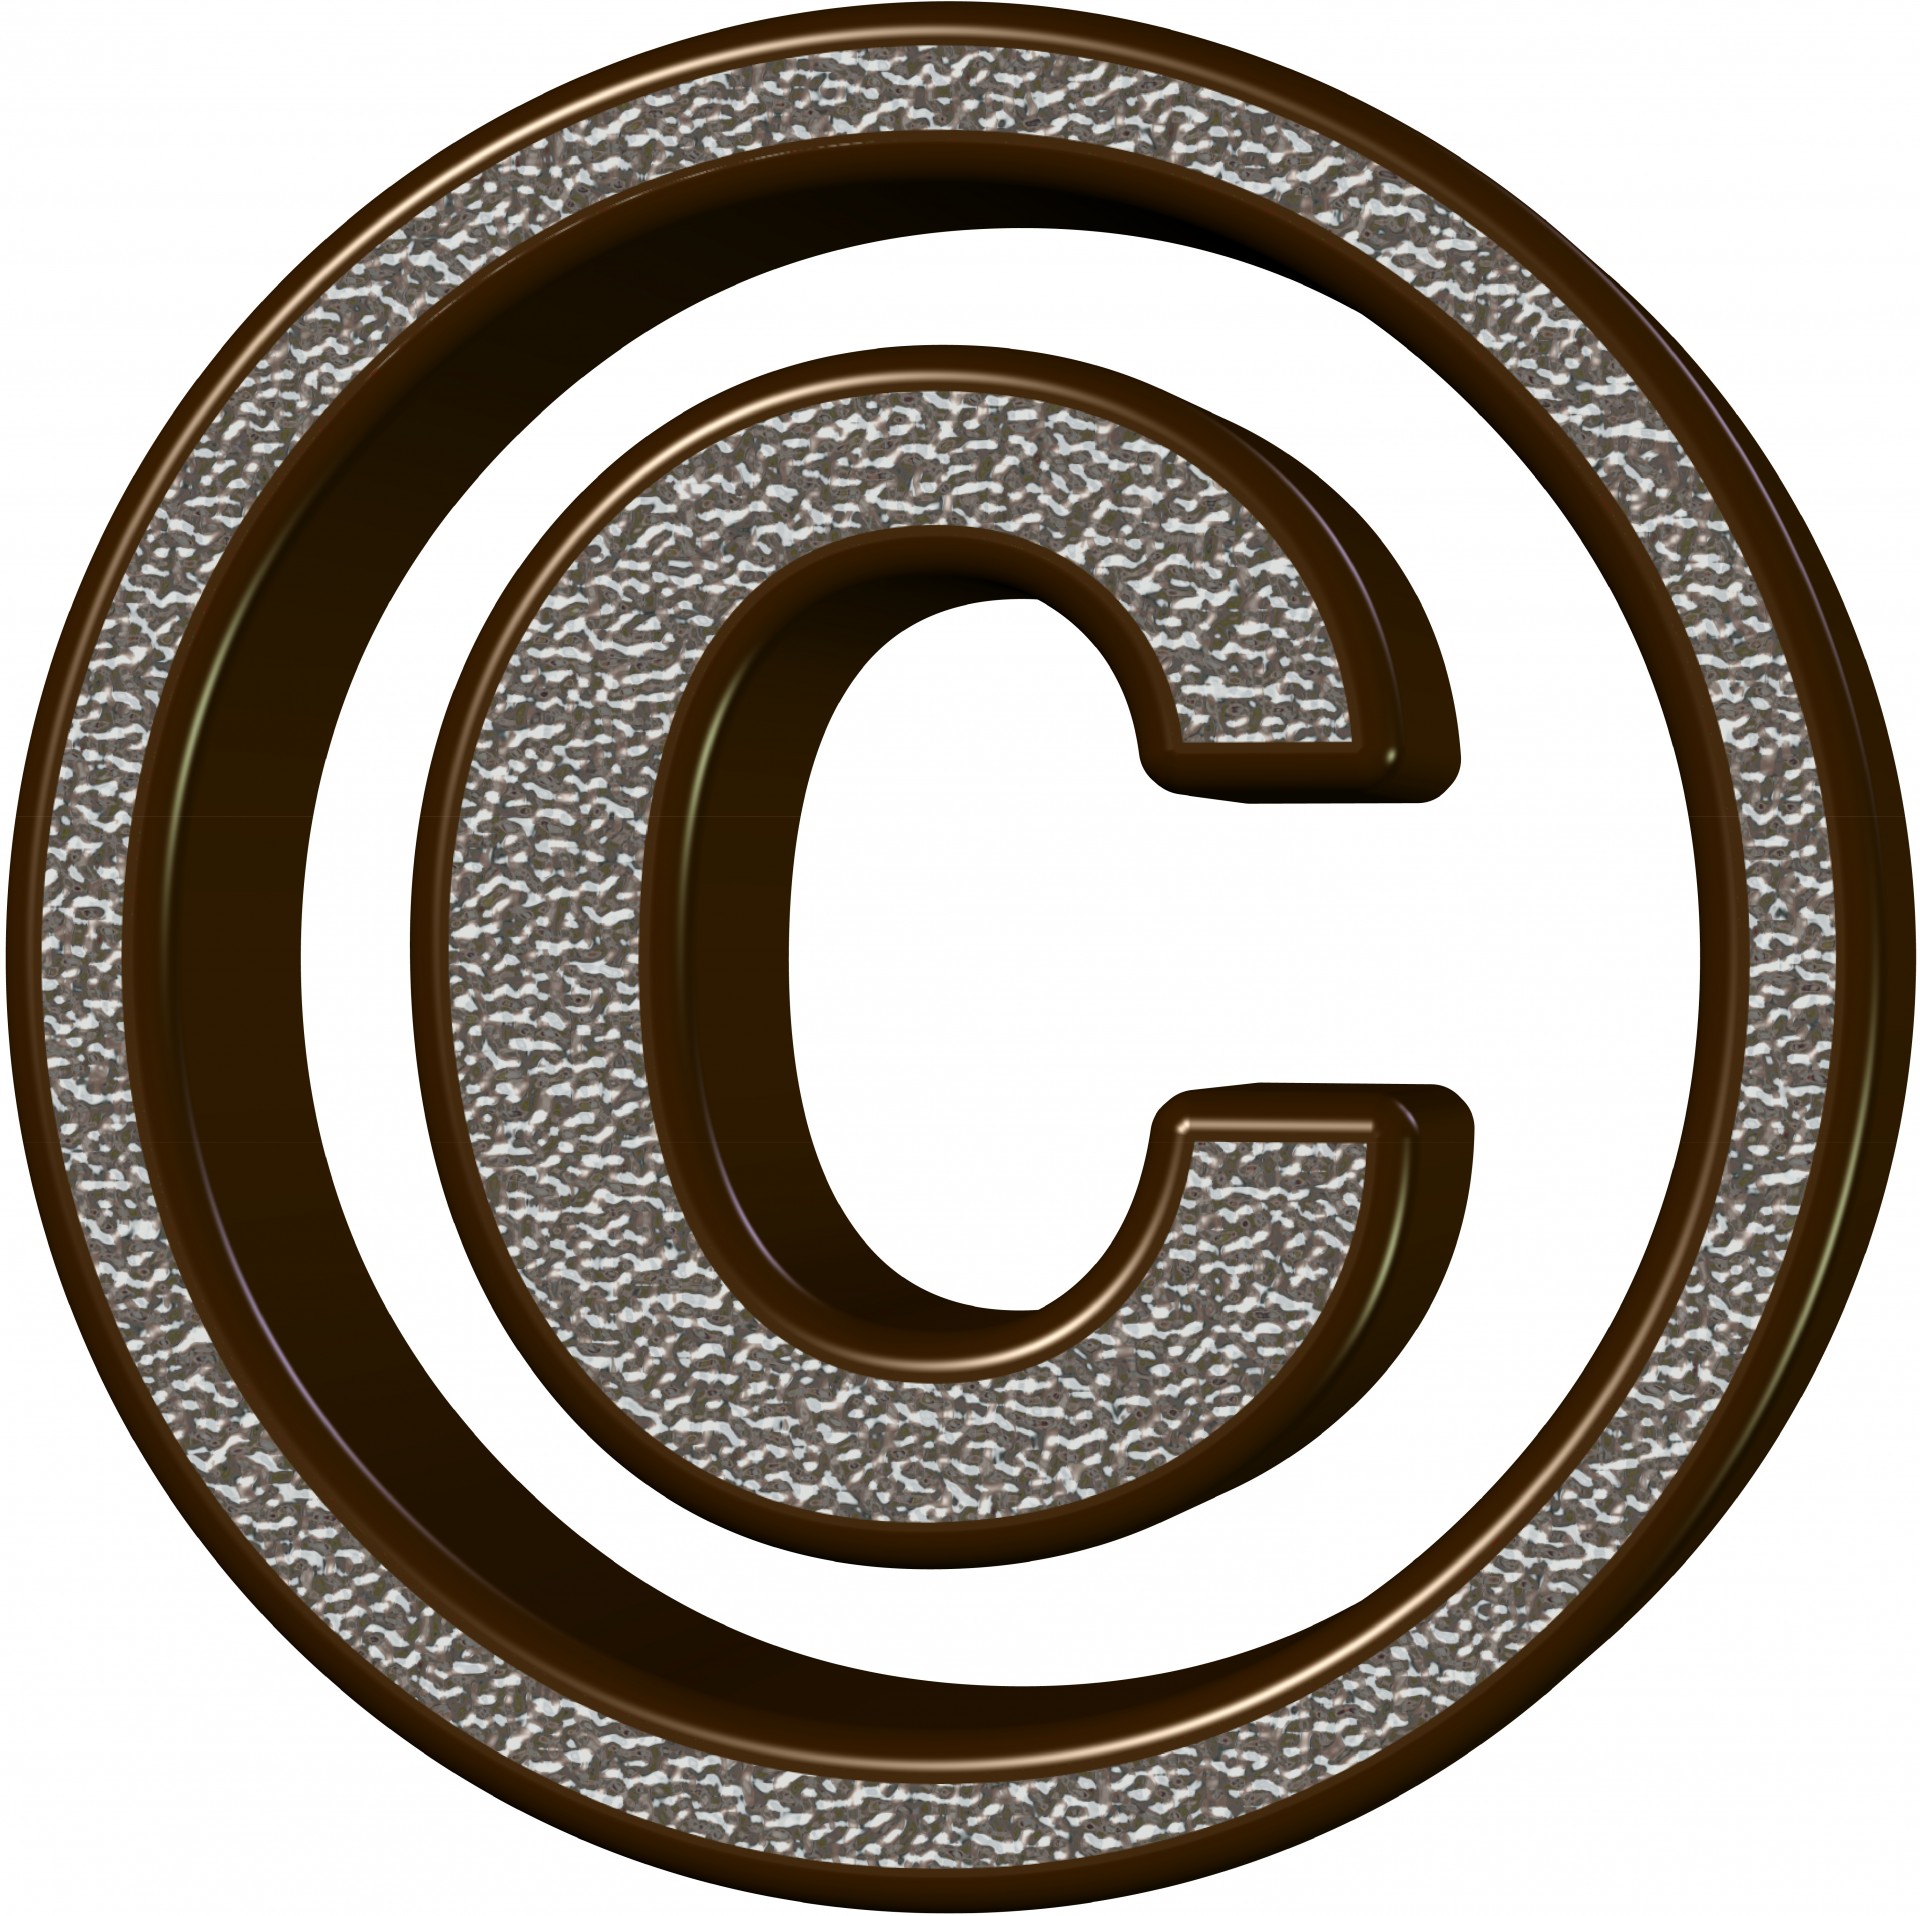 copyright sign symbol free photo